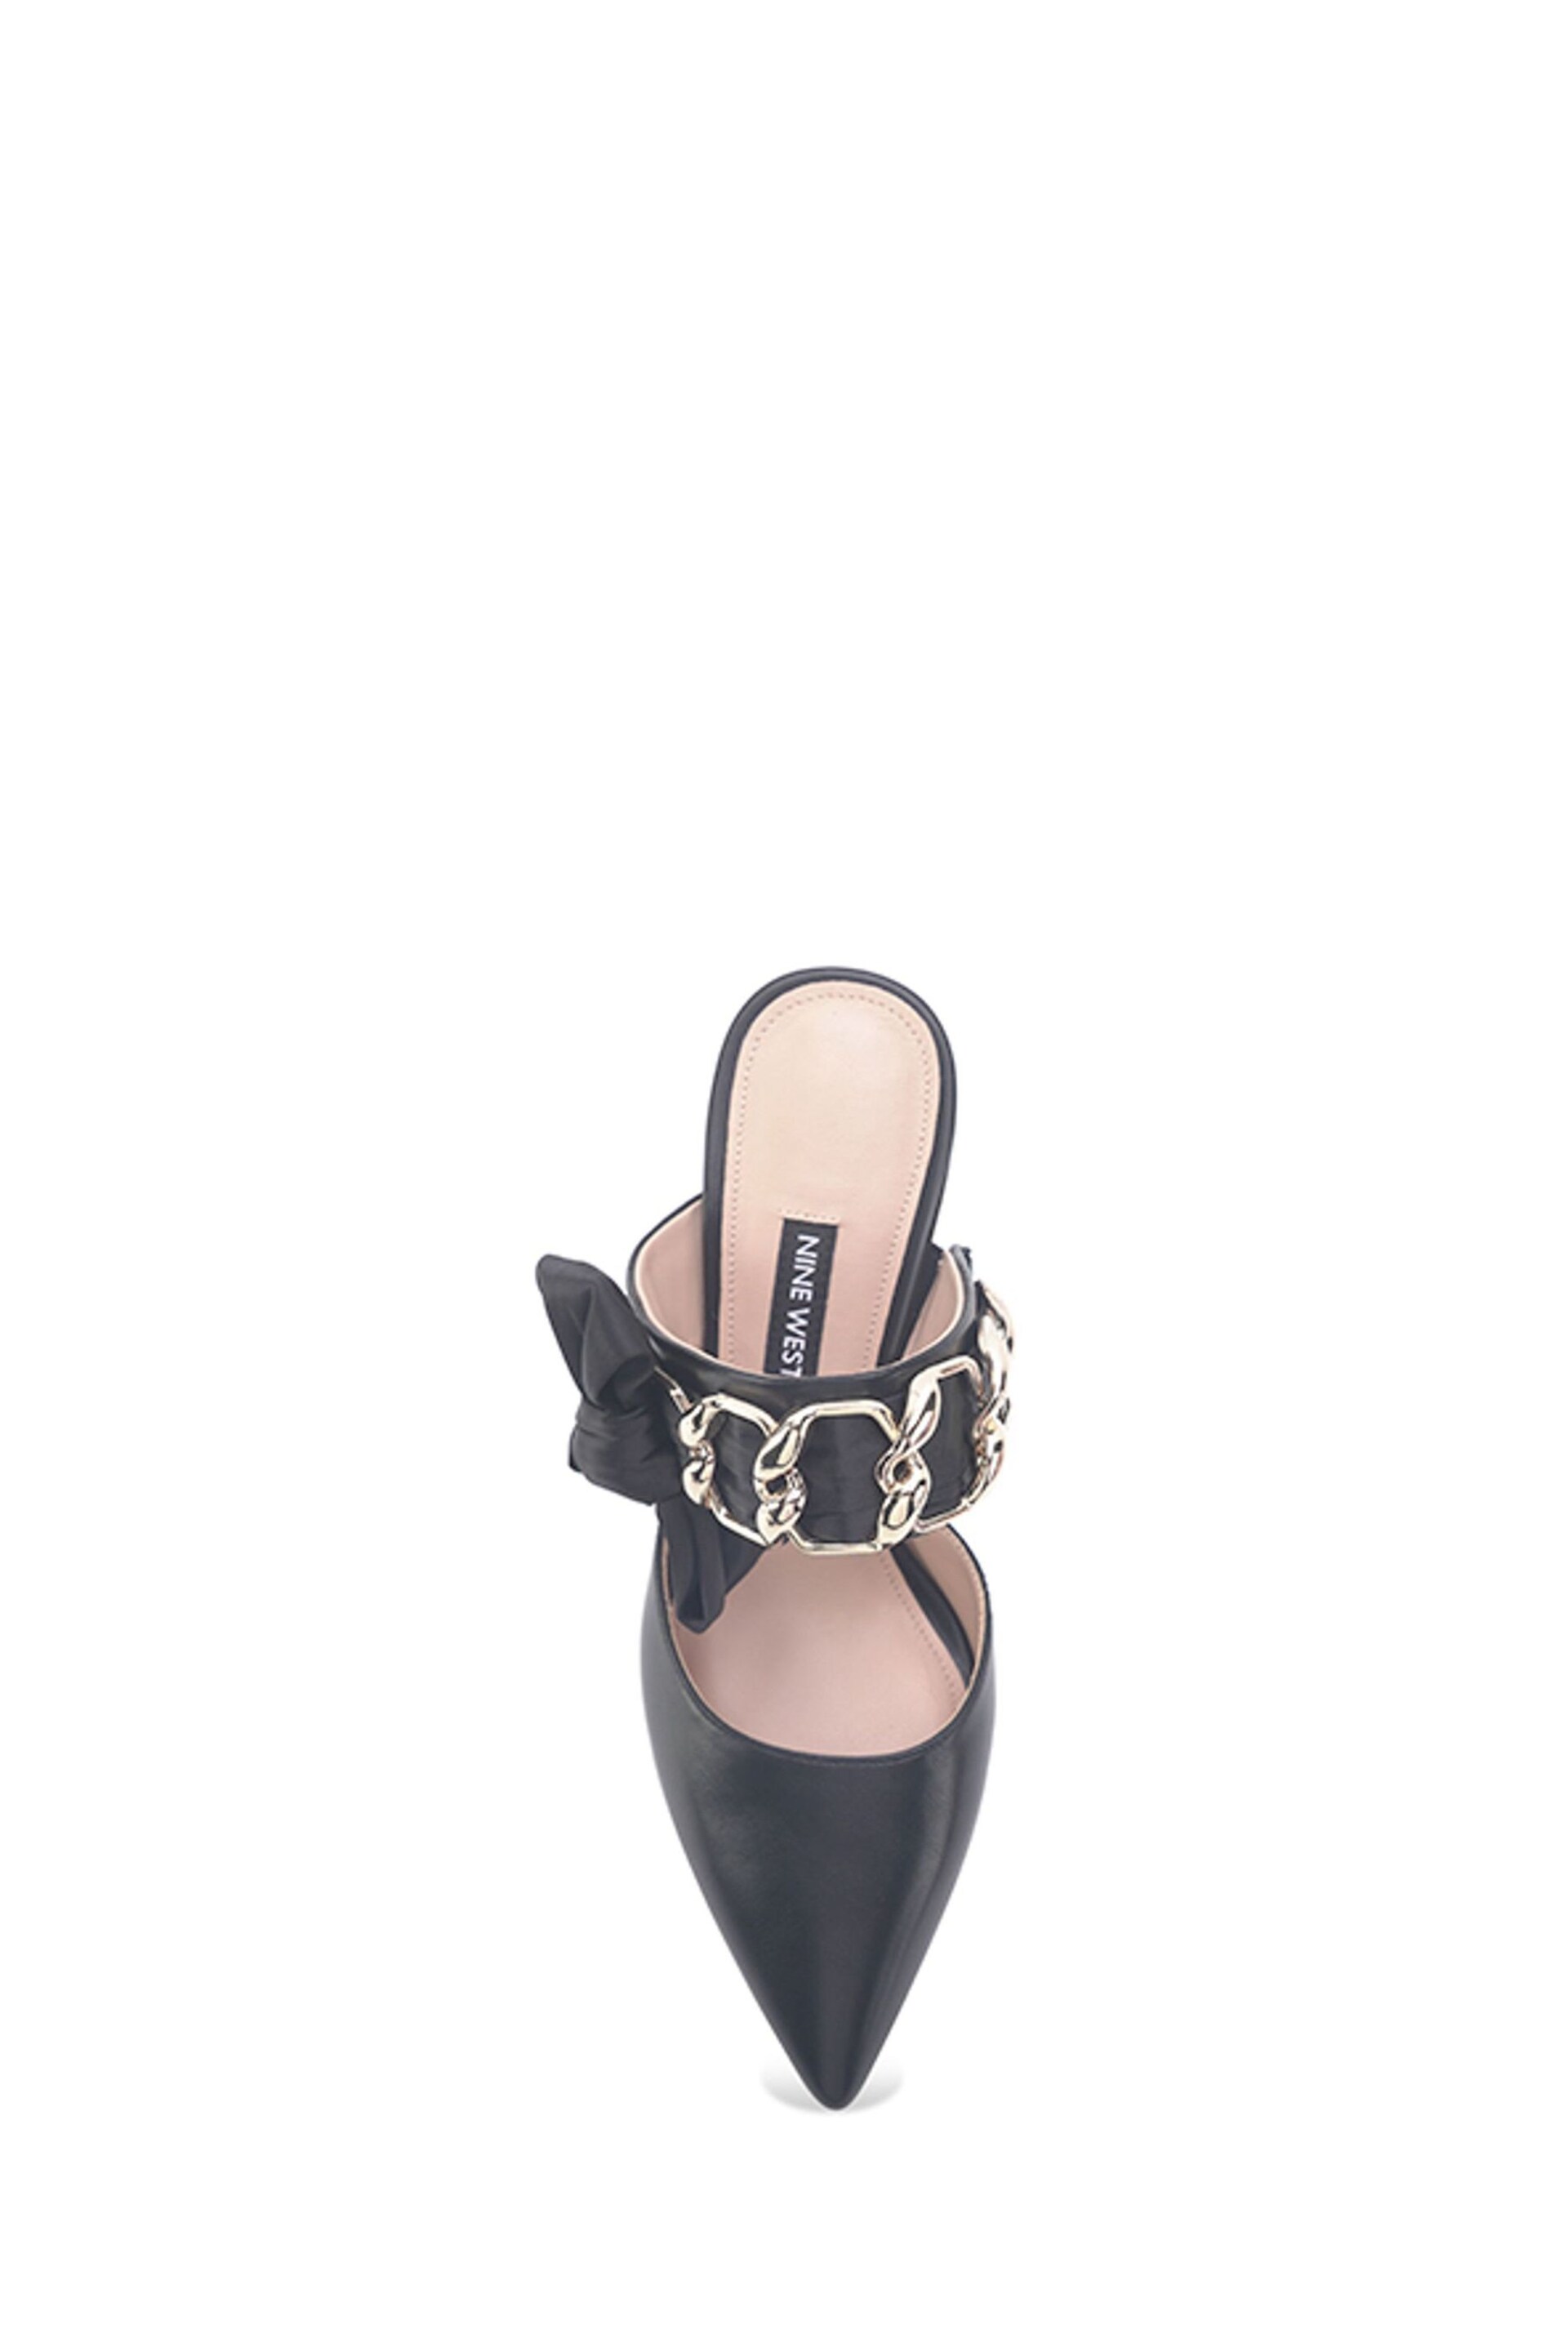 Nine West Womens 'Mina' Spool Heel Court Black Shoes - Image 3 of 3